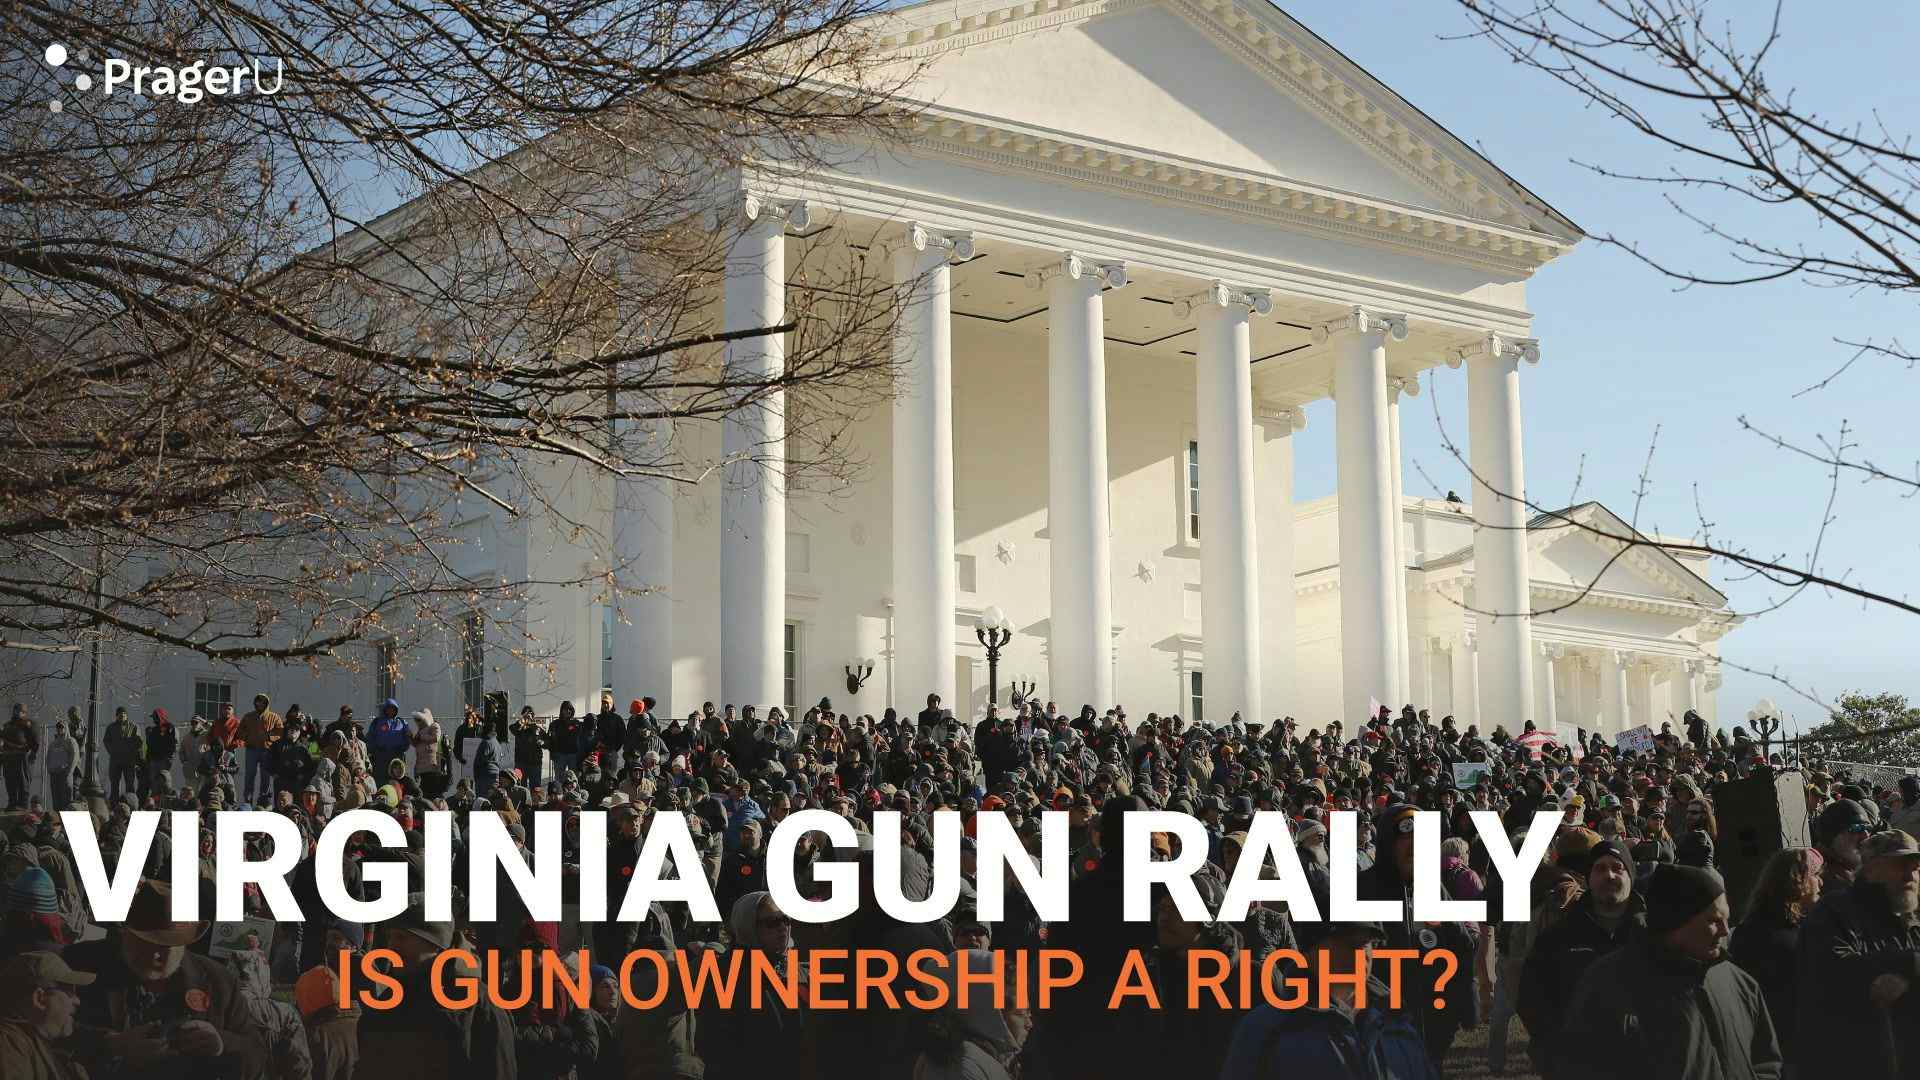 Virginia Gun Rally: Is Gun Ownership a Right?